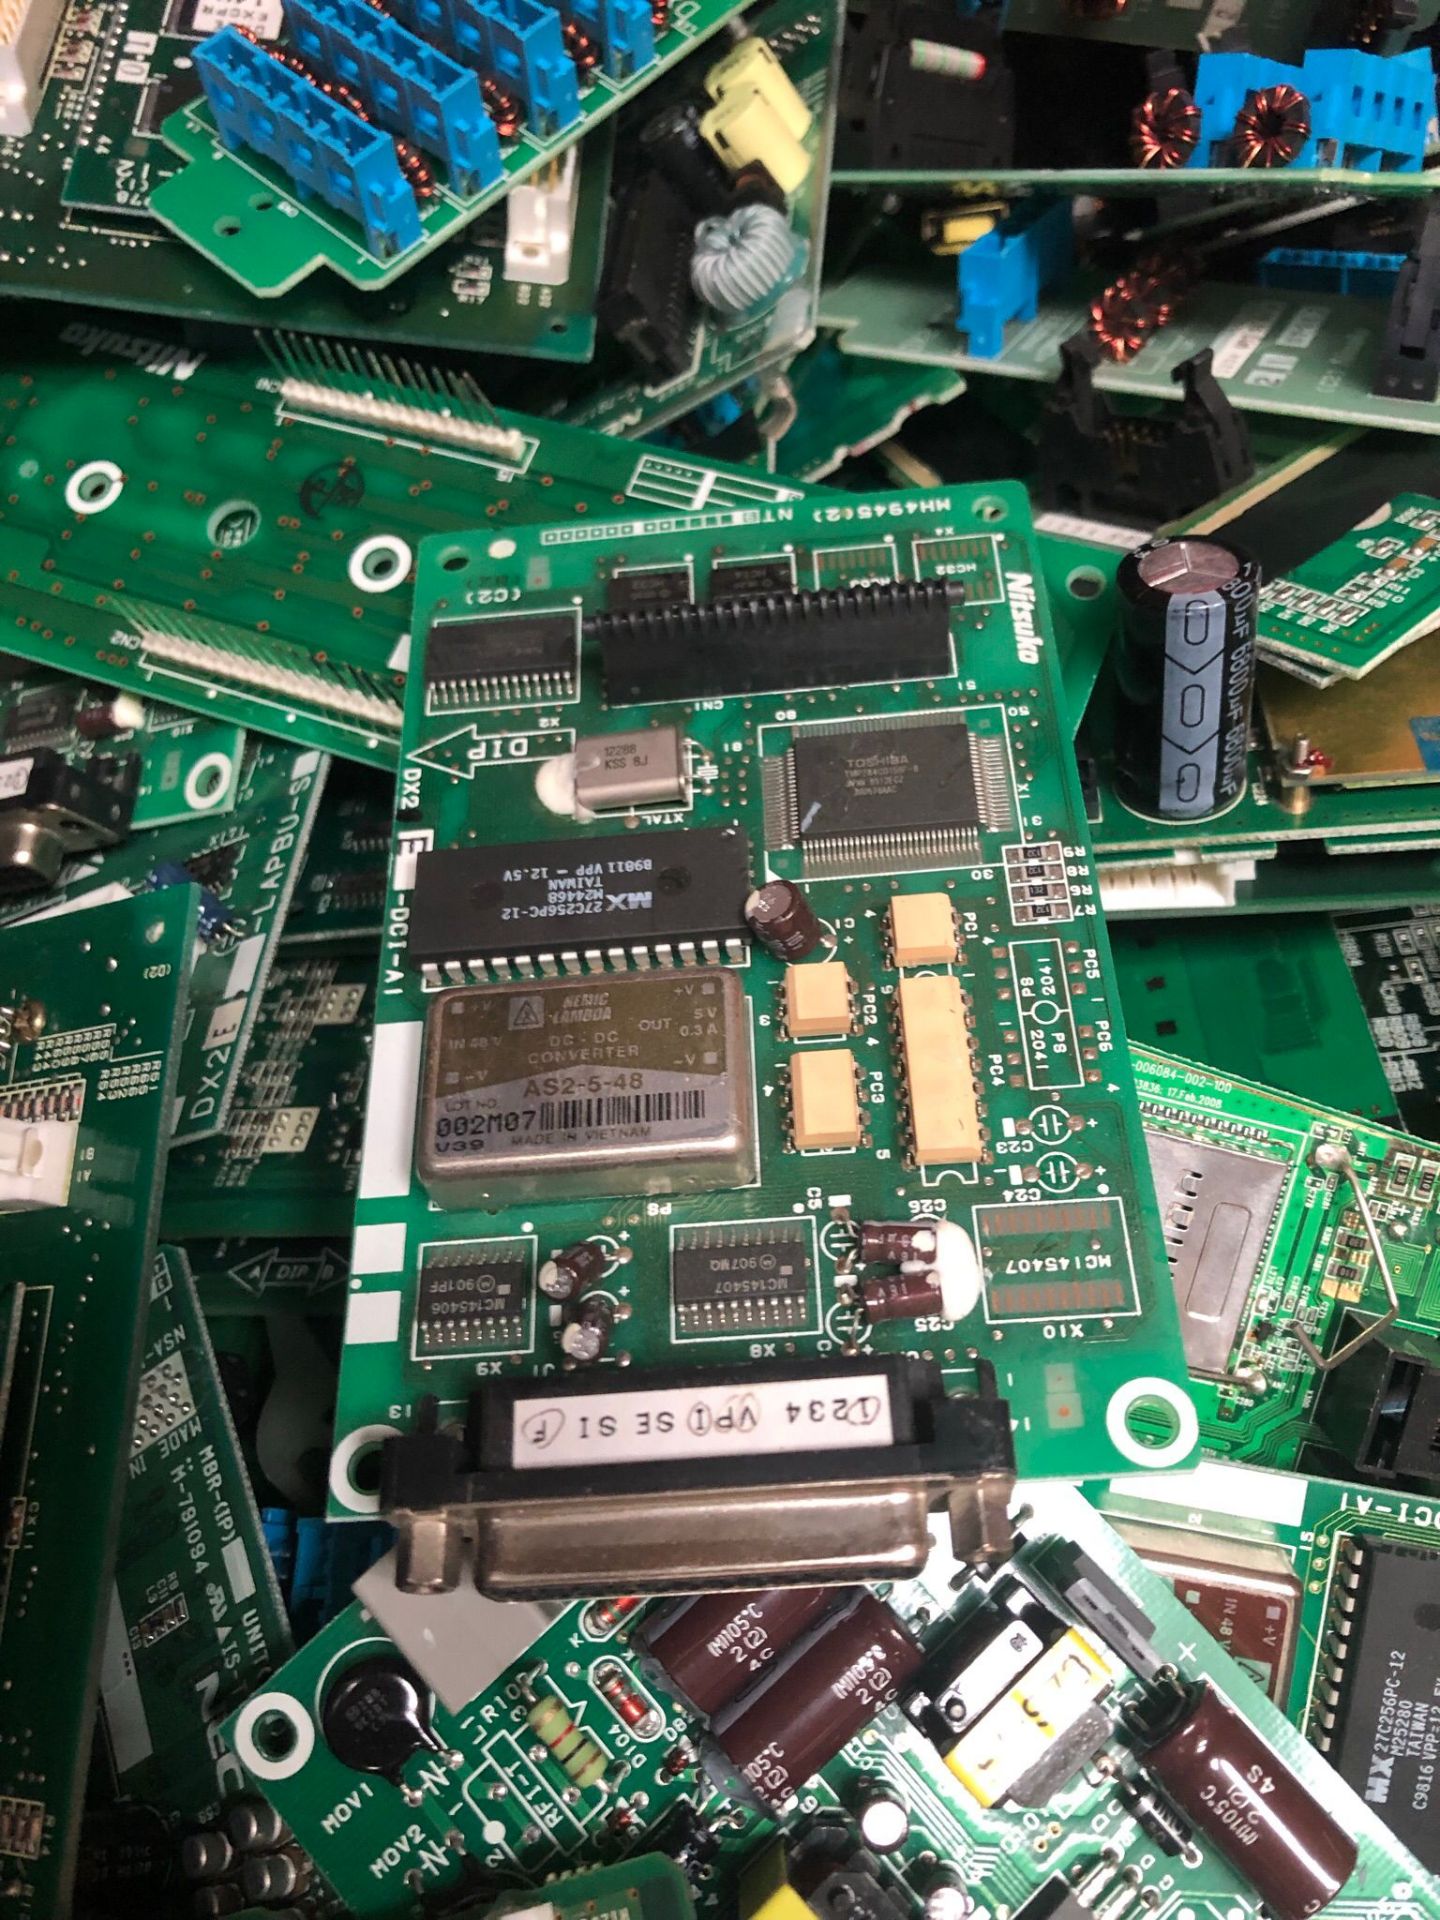 Job Lot Bulk Scrap Motherboards Telecommunications Telecom Gold Refinery Salvage E-waste - Image 6 of 15